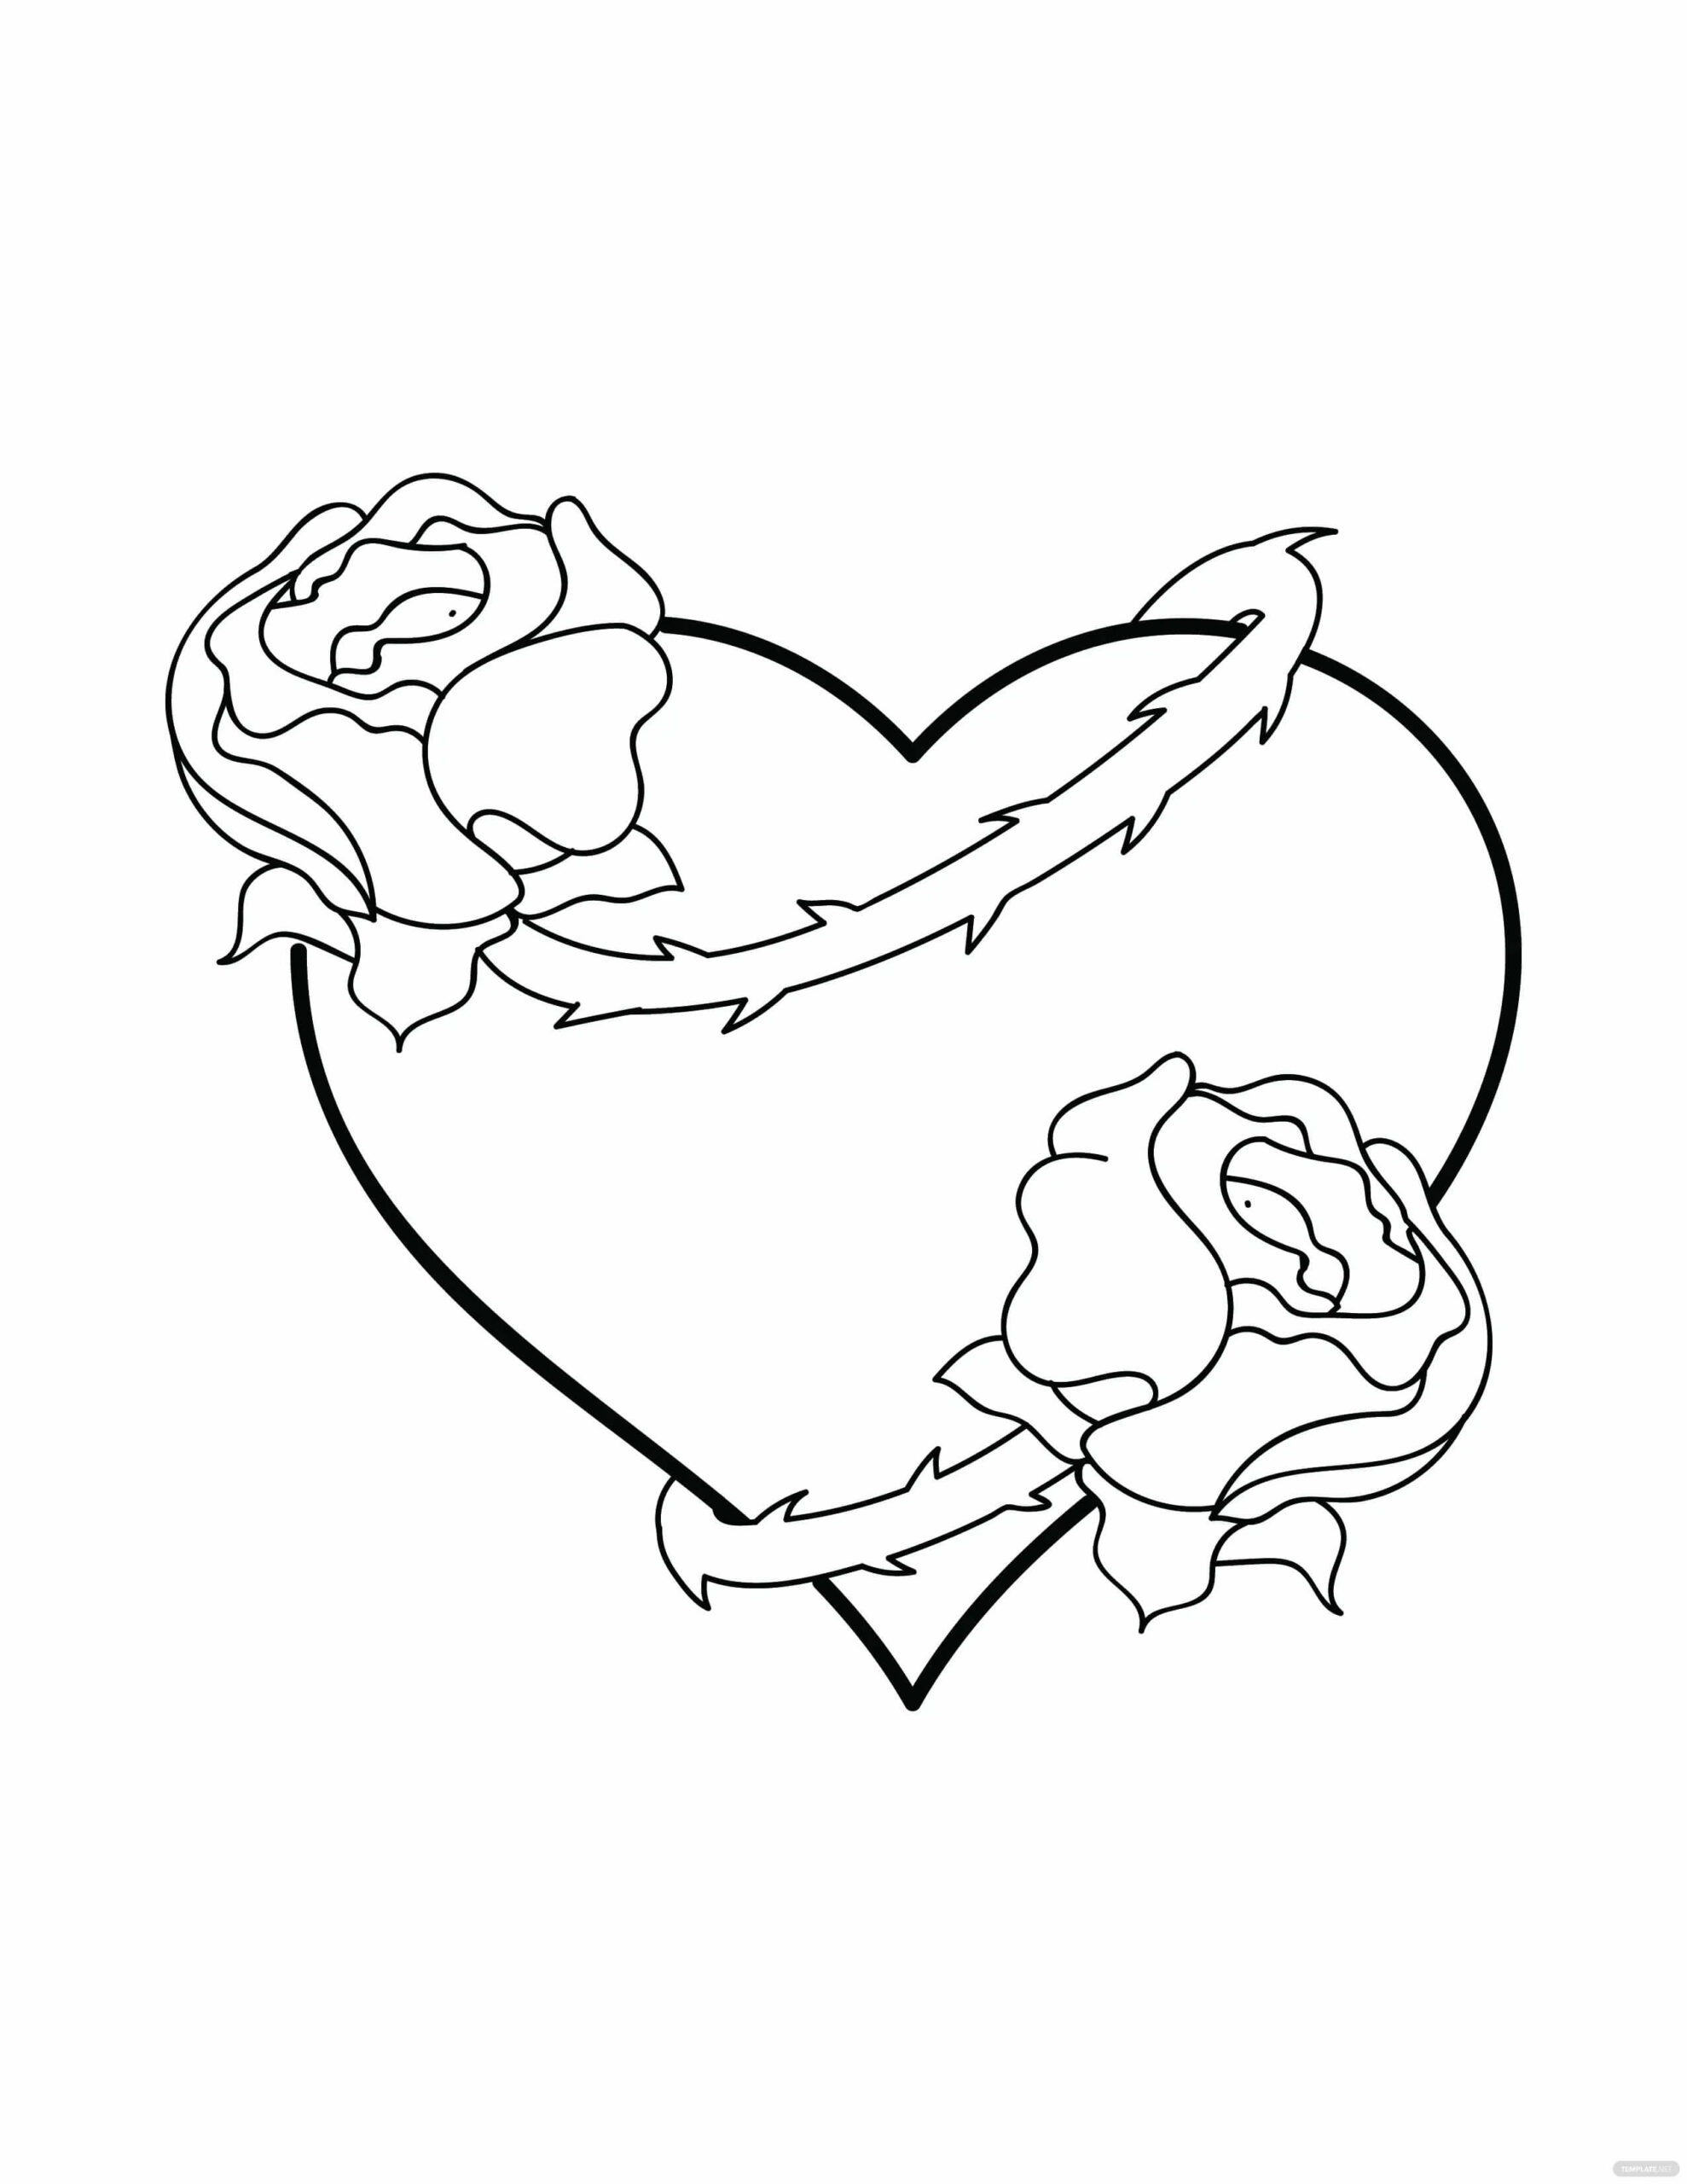 Coeur et Roses coloring page